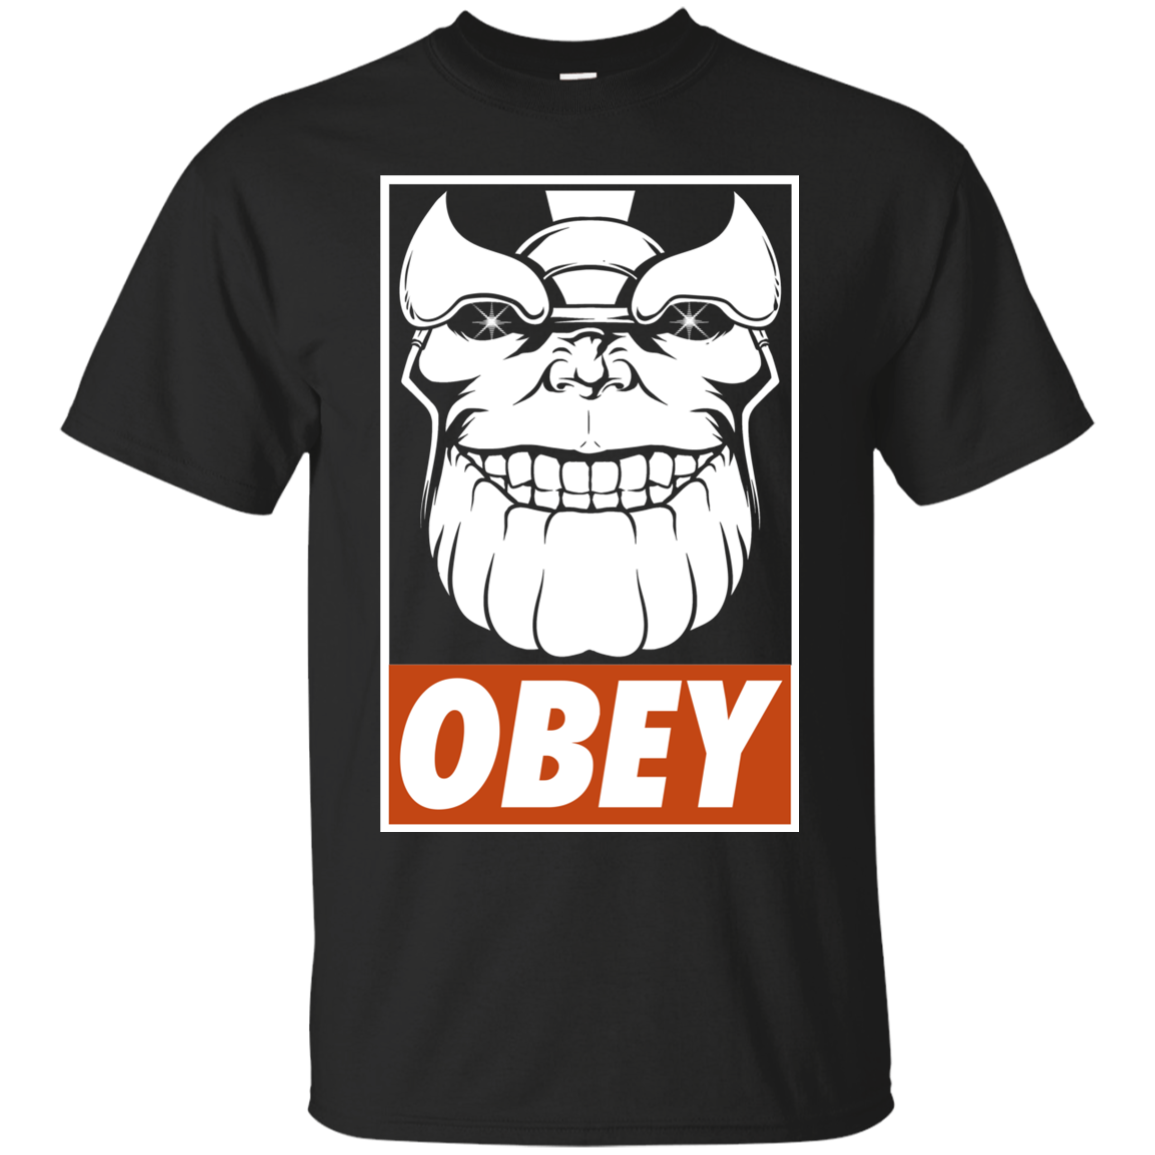 Obey the Titan T-Shirt